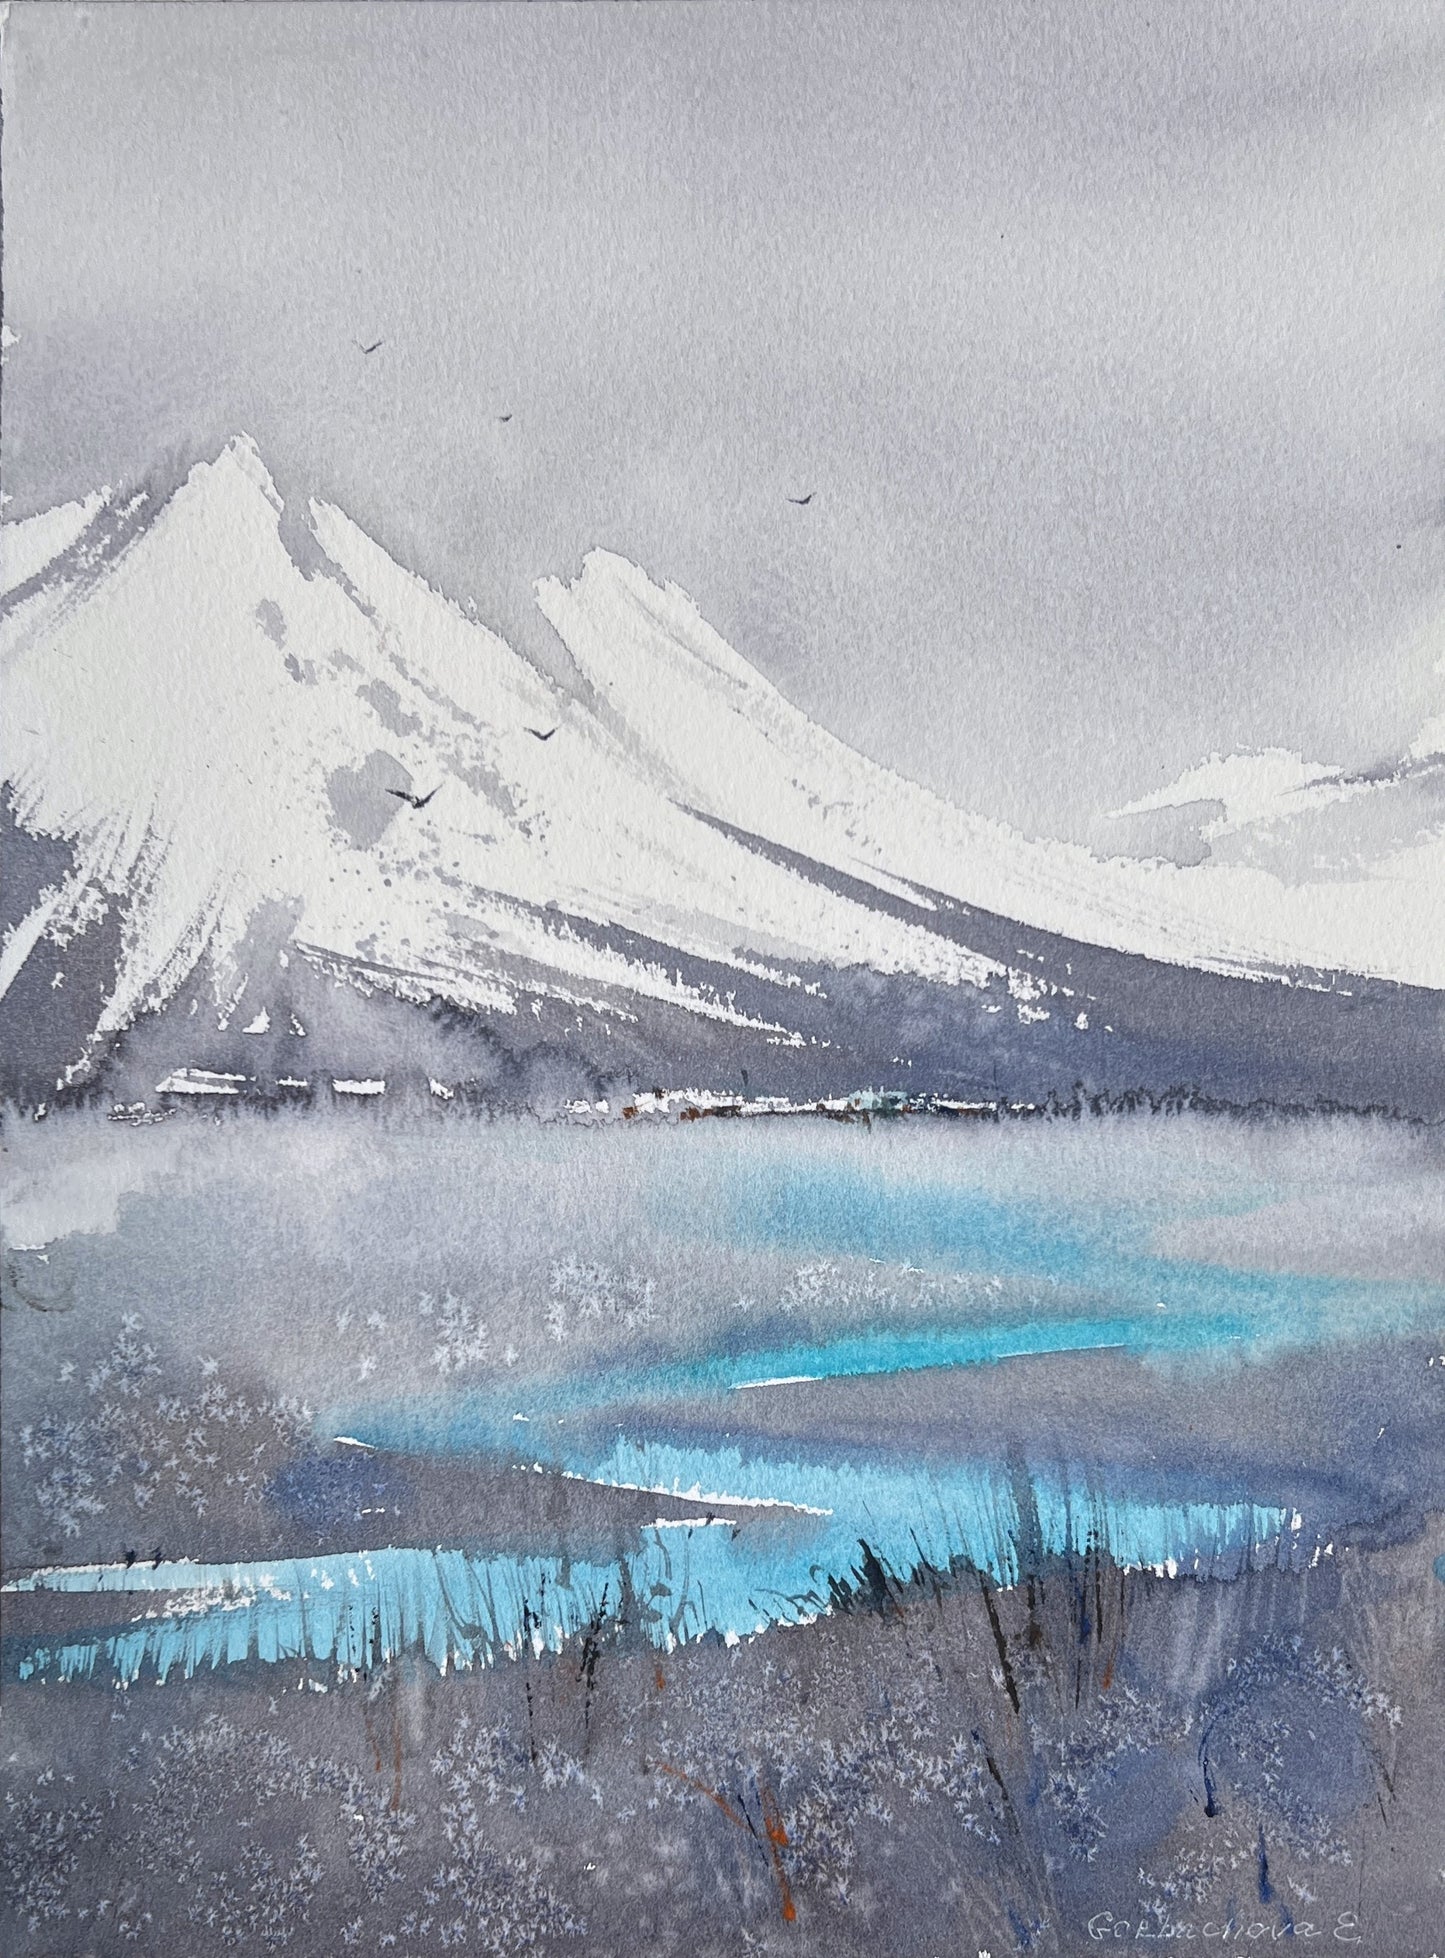 Original Watercolor Painting, Foggy Landscape - Mountain river #19